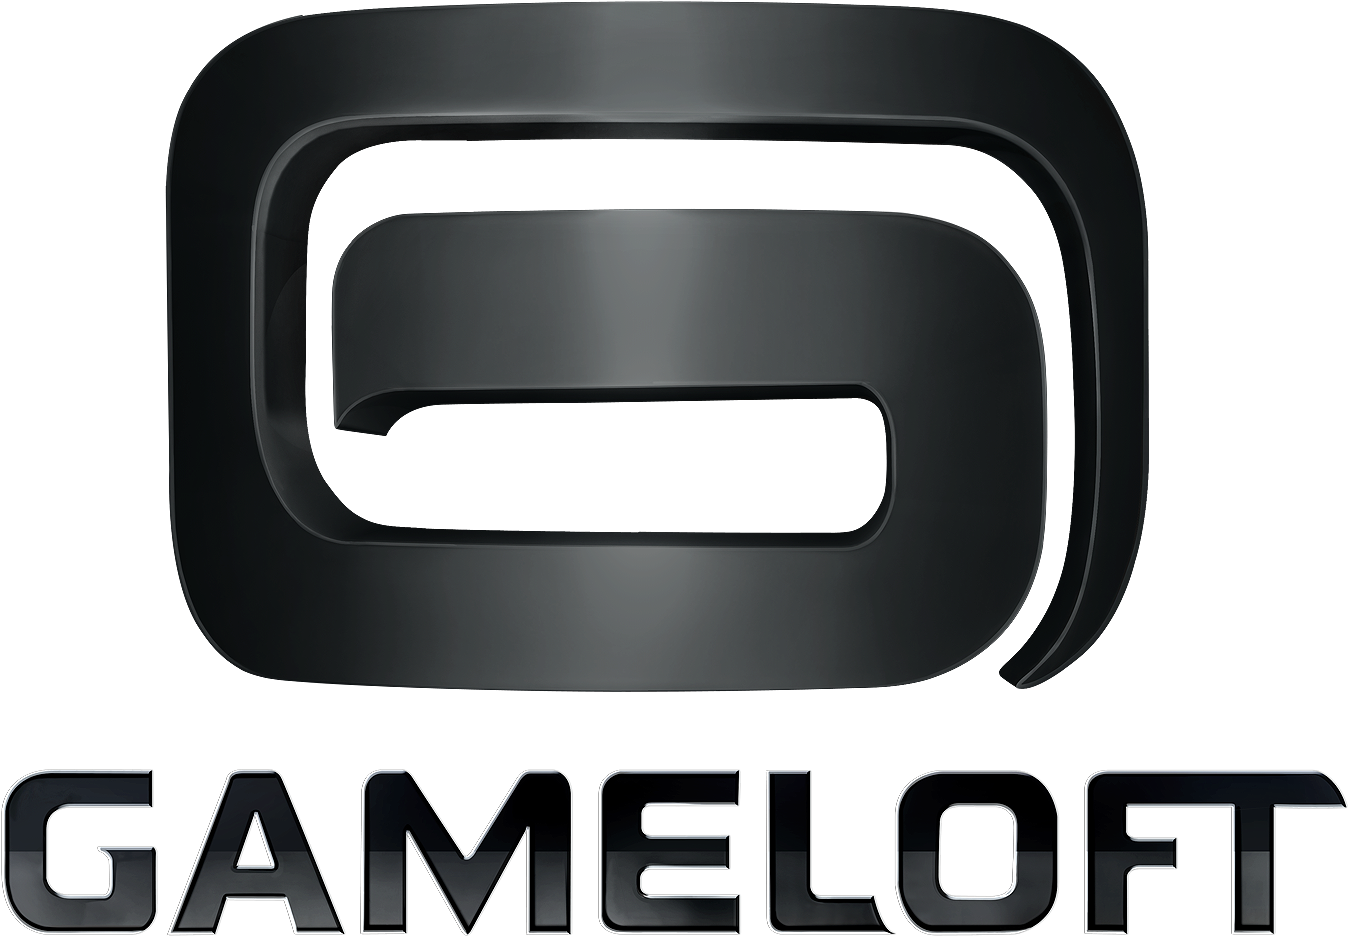 Gameloft Logo - Gameloft Logo Png Clipart (1024x688), Png Download